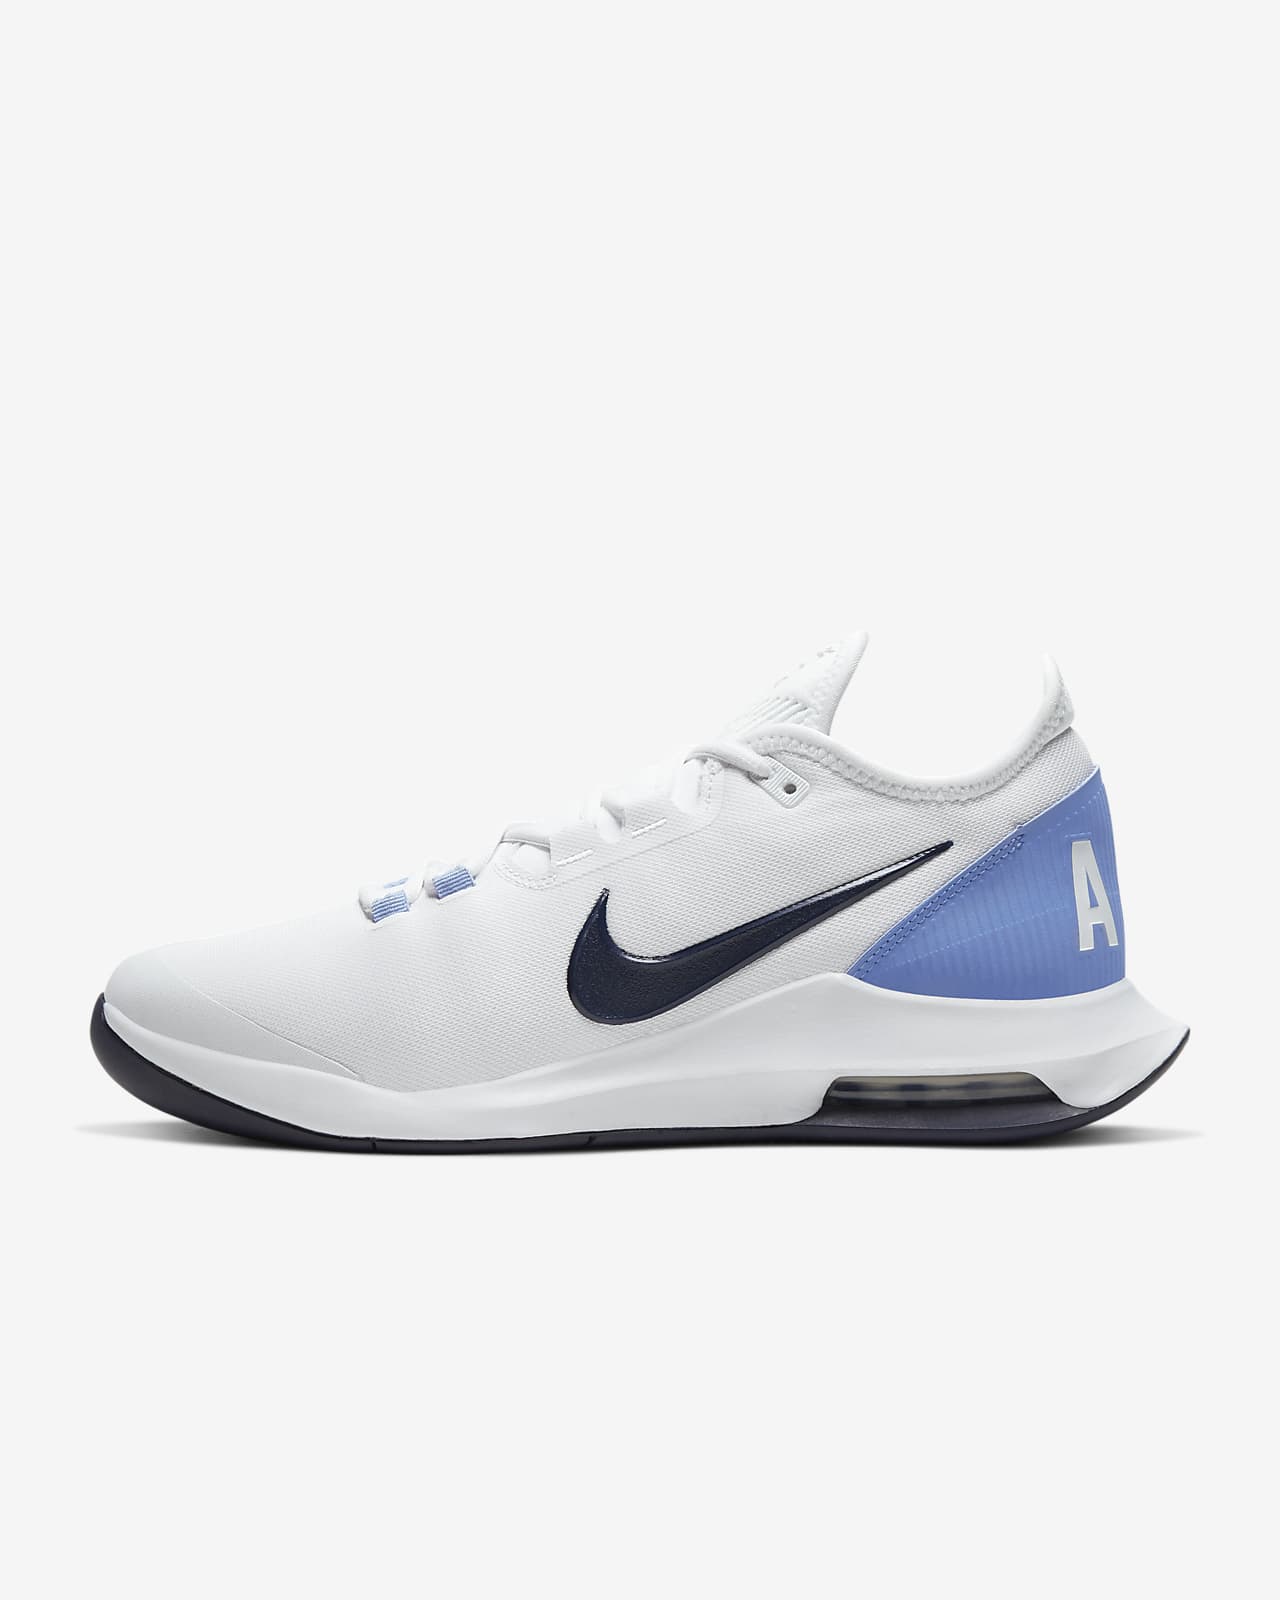 NikeCourt Air Max Wildcard Men's Tennis Shoe